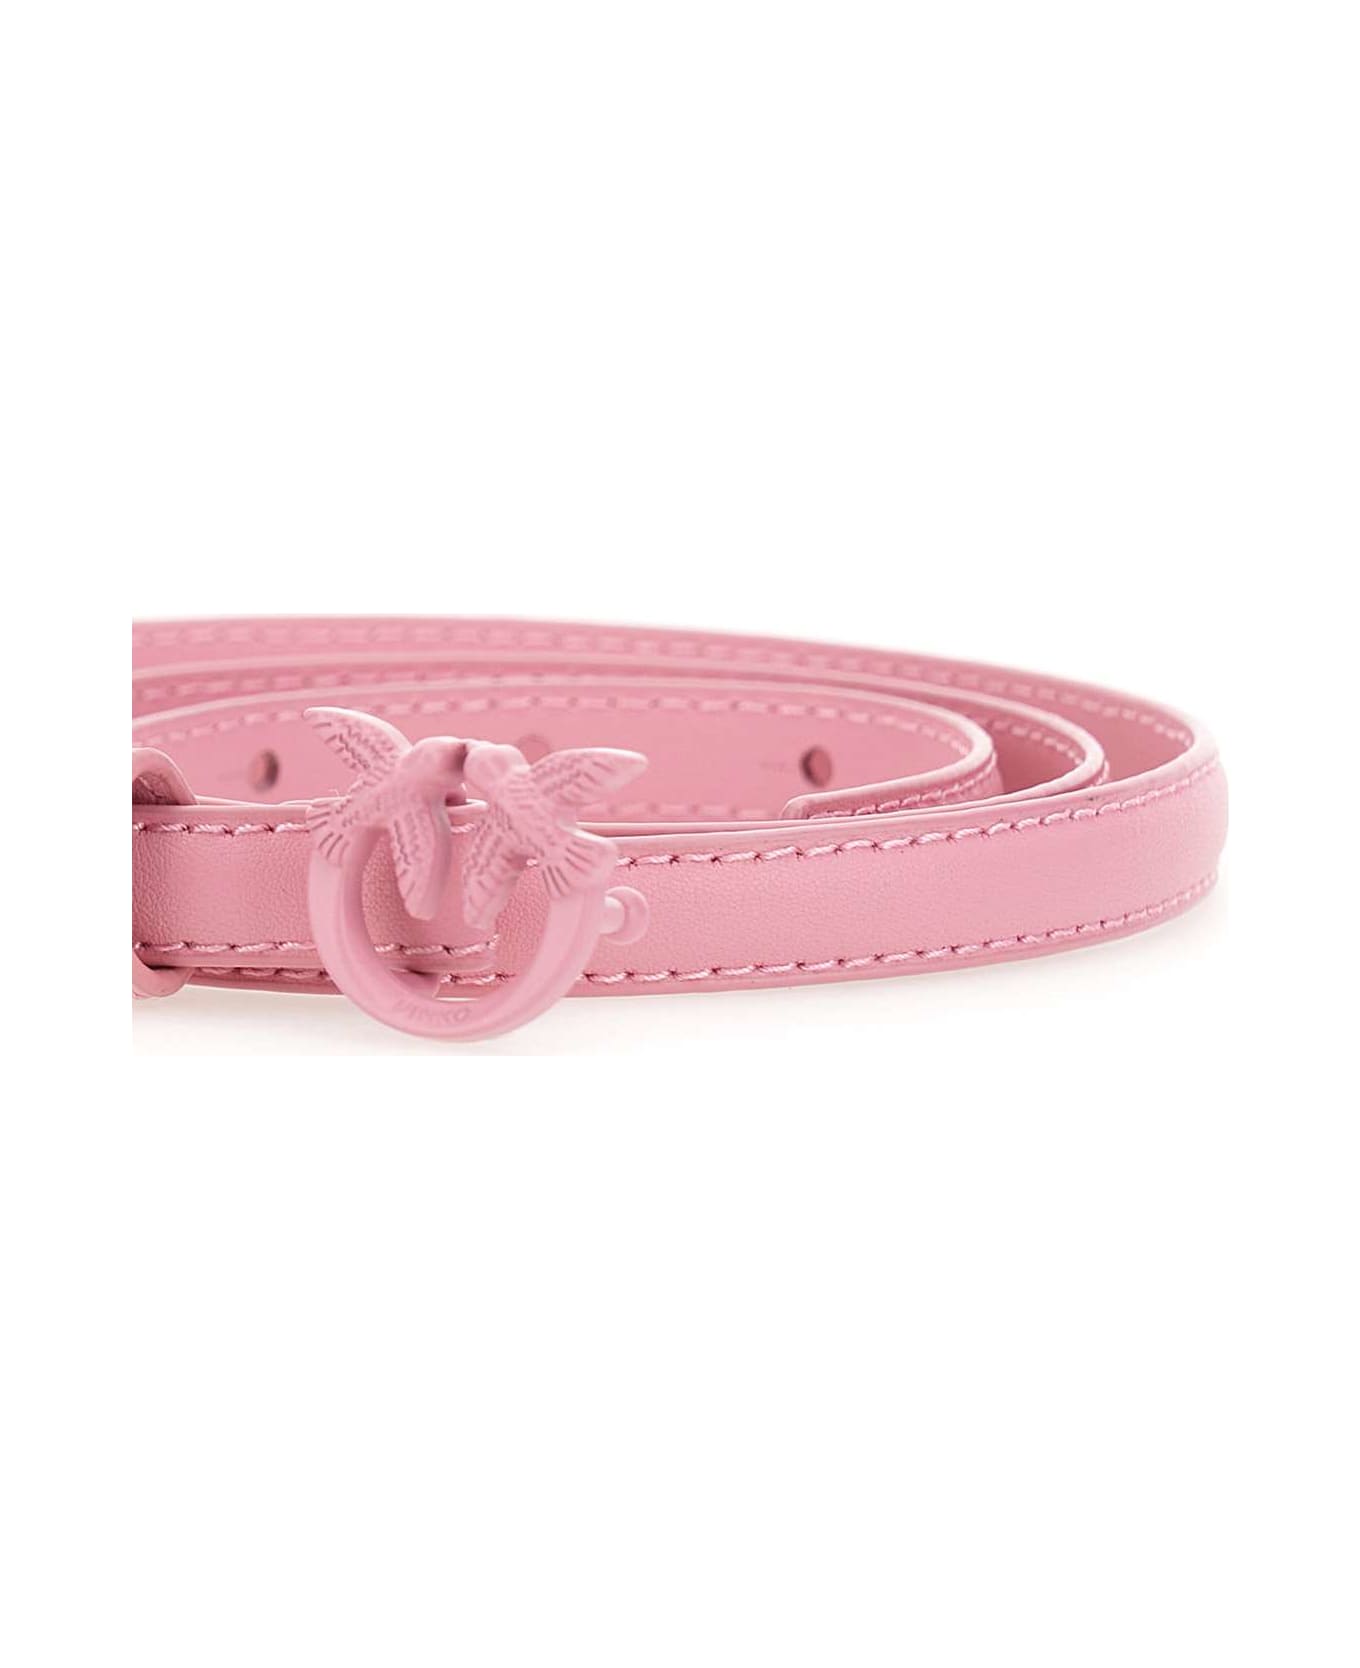 Pinko "love Berry" Leather Belt - PINK